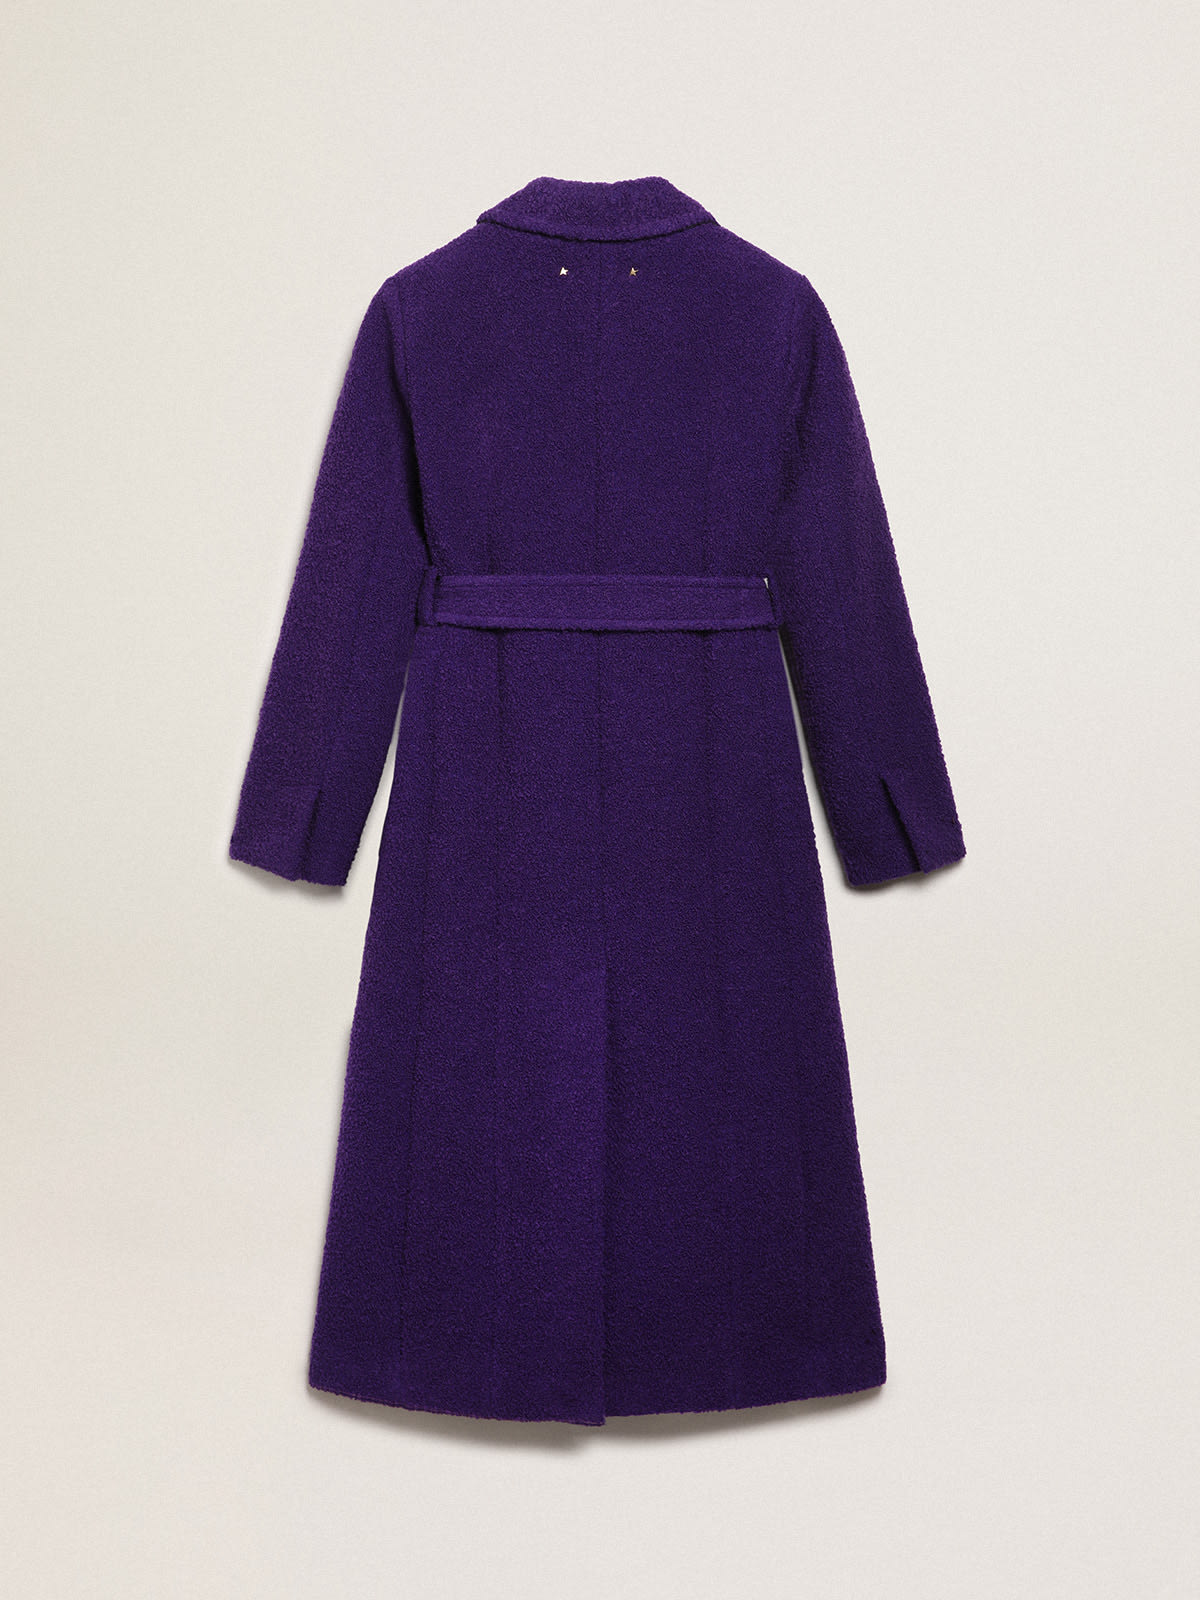 Women's coat in indigo purple wool with printed lining Golden Goose